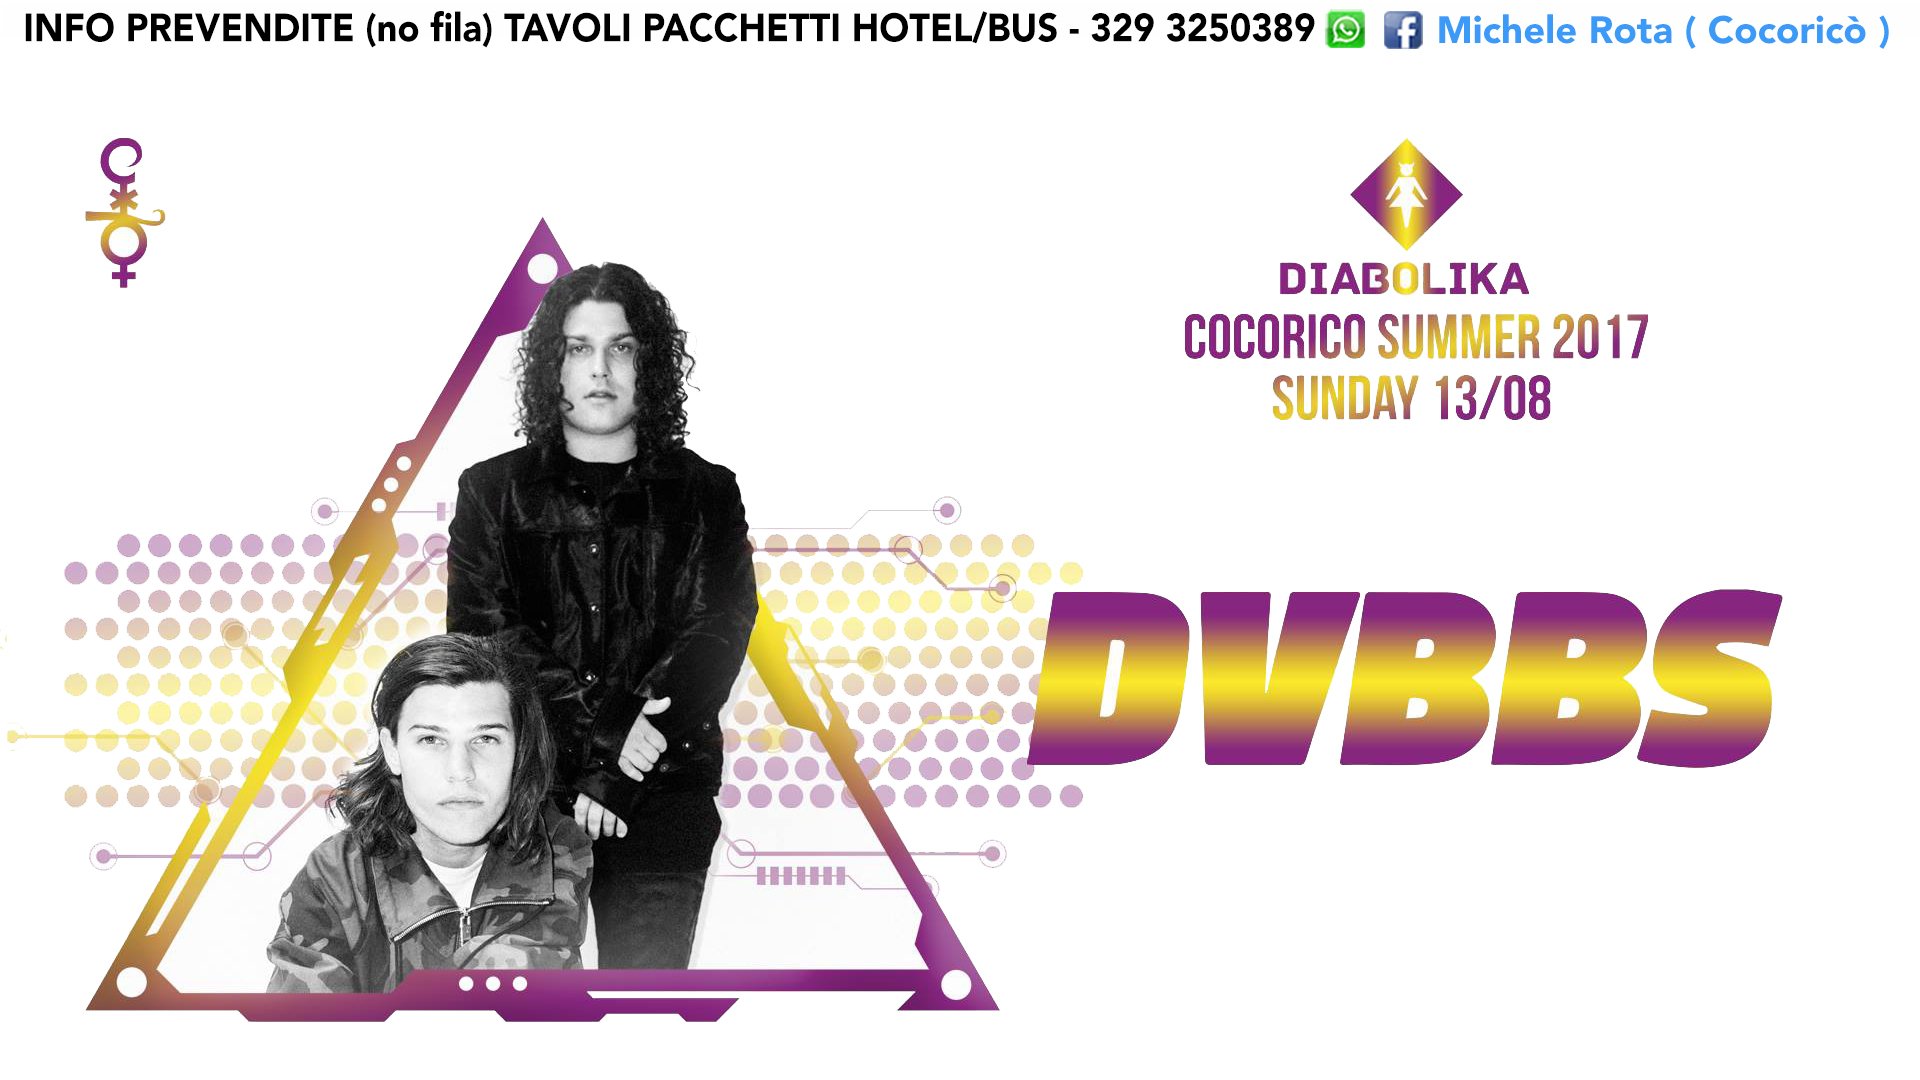 Dvbbs Cocorico 13 Agosto 2017 Ticket Tavoli Pacchetti Hotel